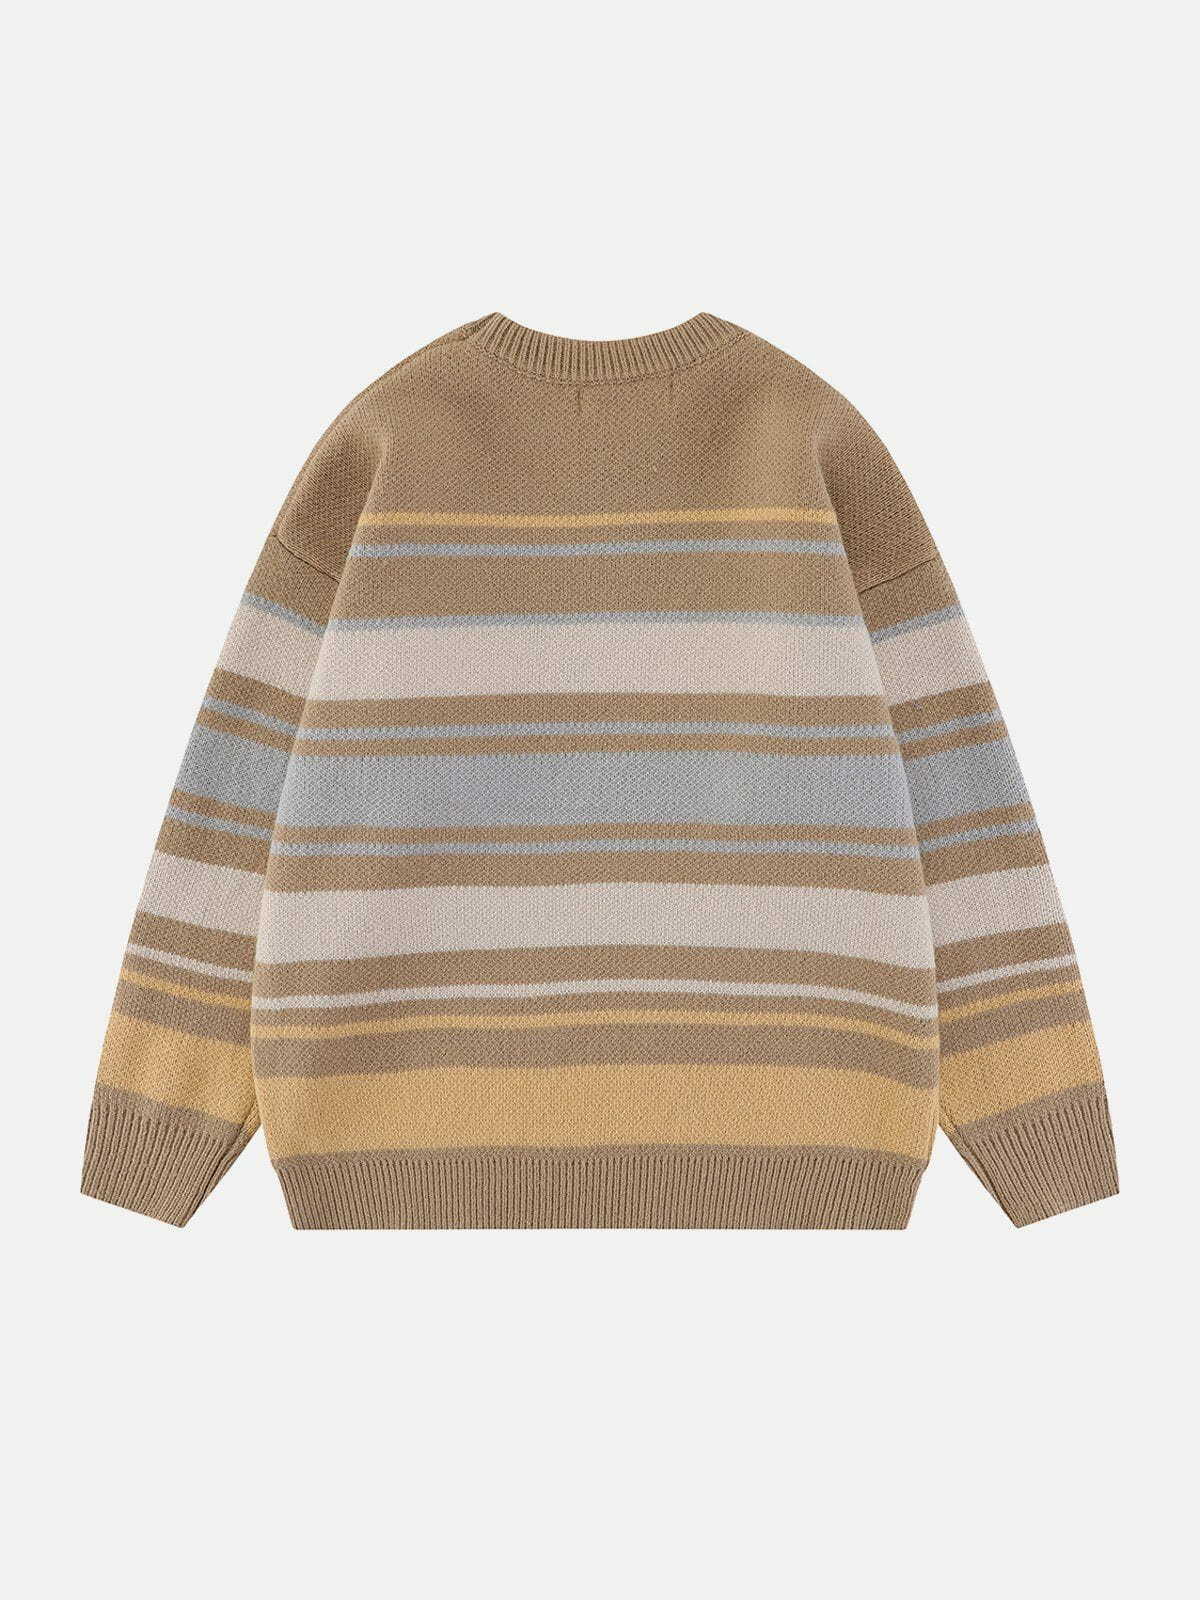 retro striped sweater vibrant & timeless fashion 7659